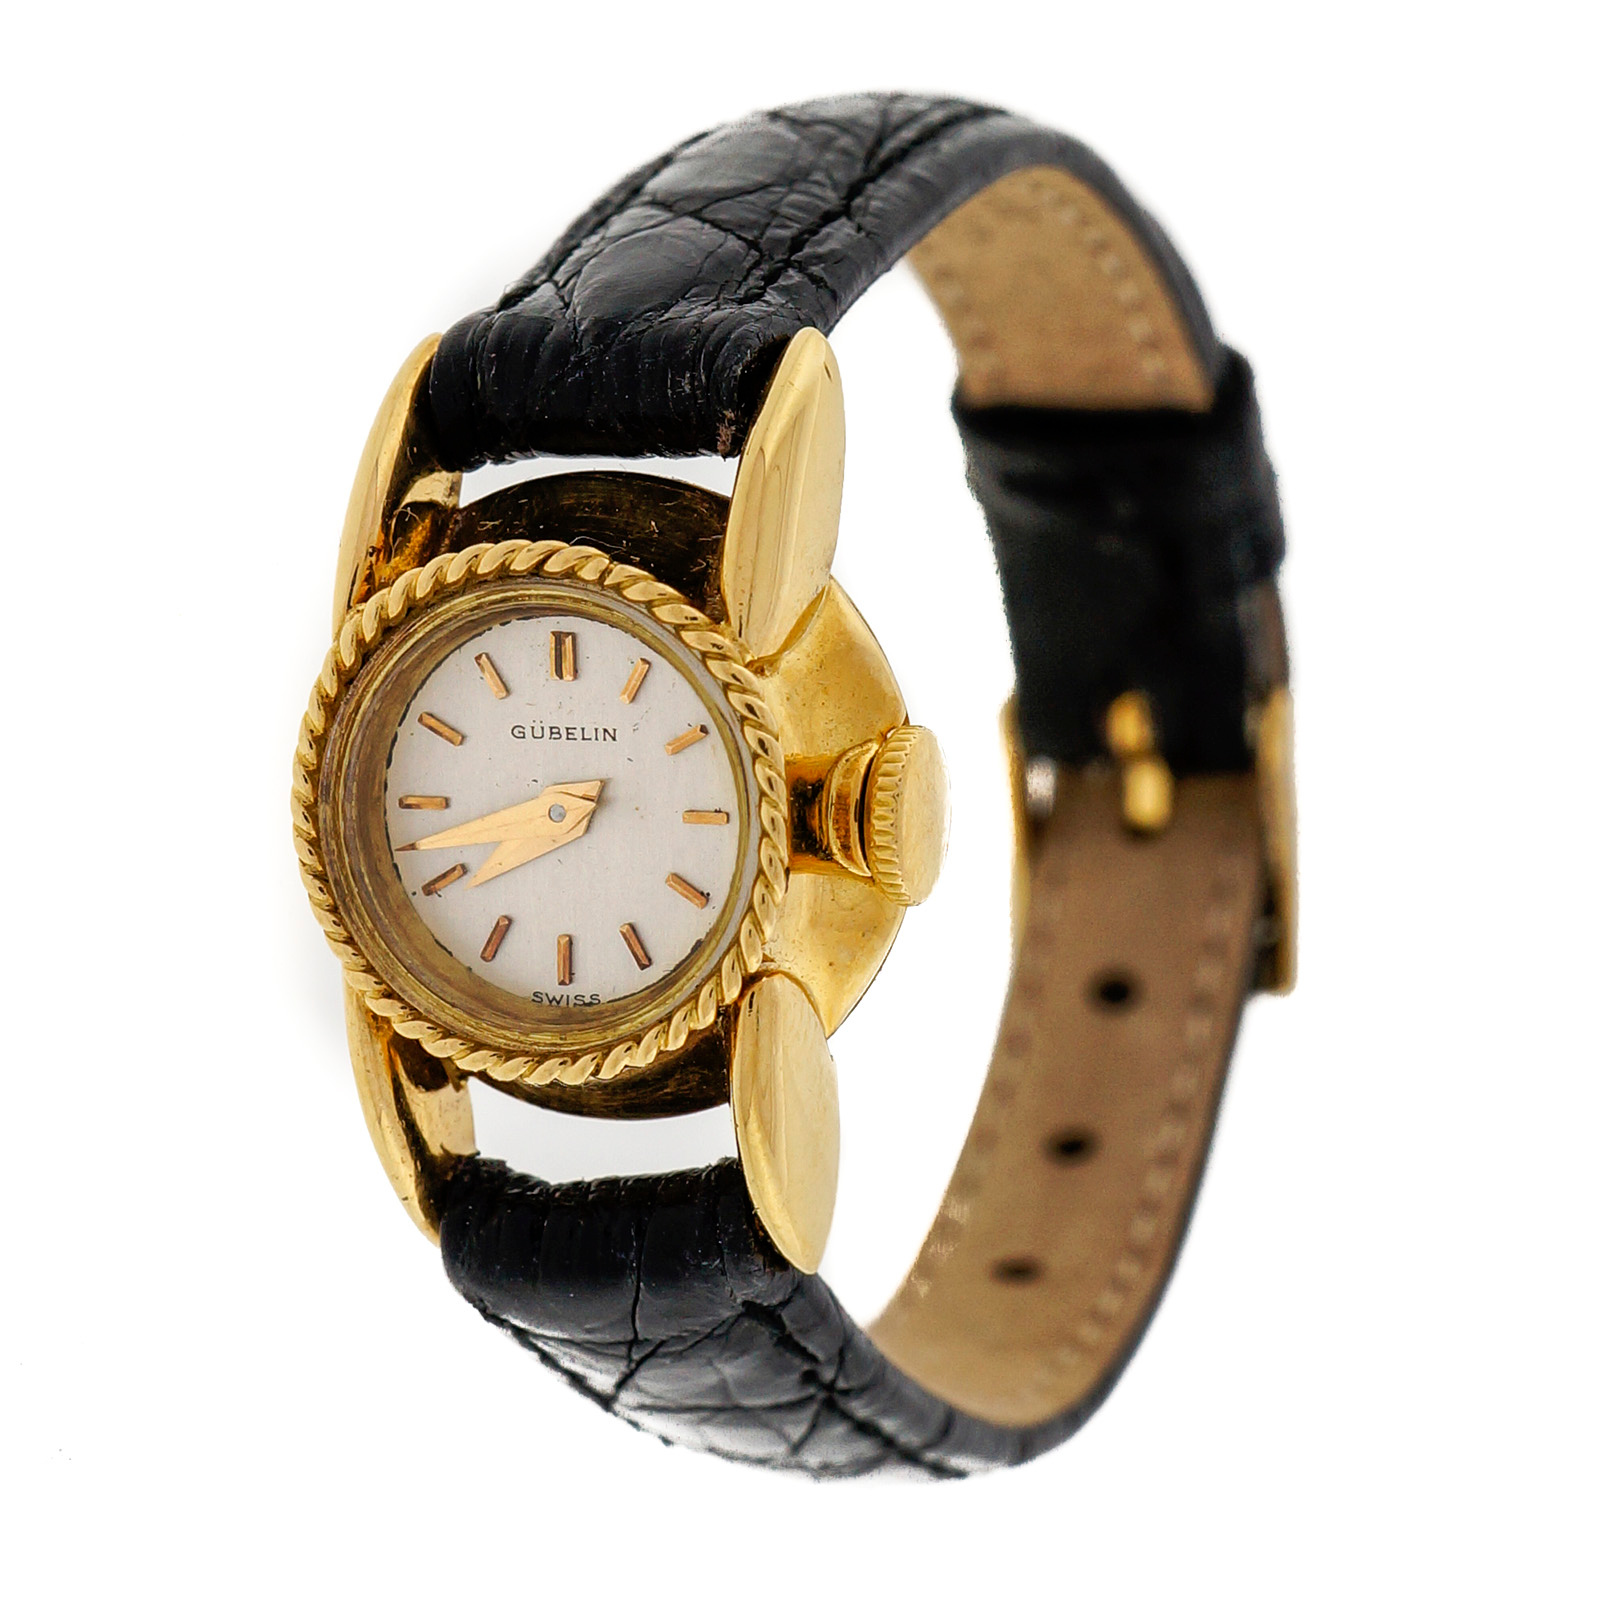 gubelin watch gold